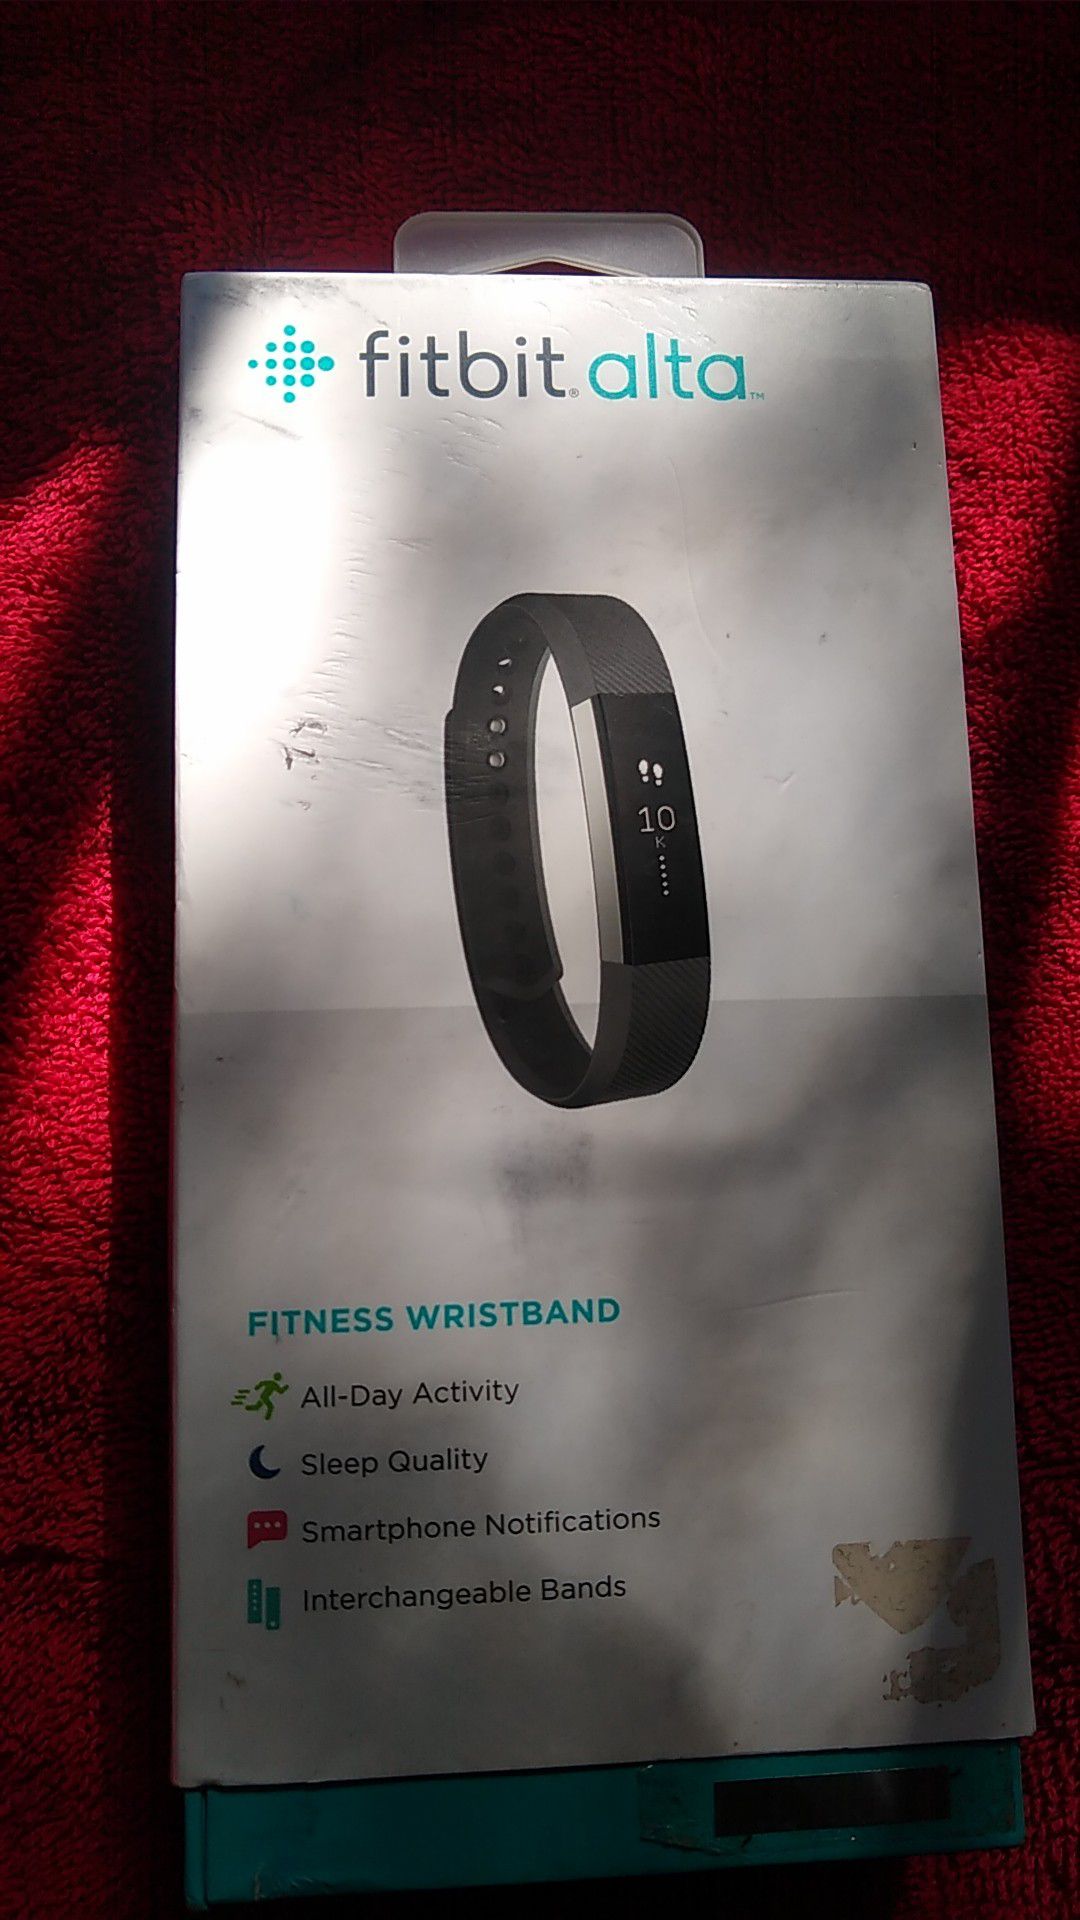 Fitbit Alta fitness wristband